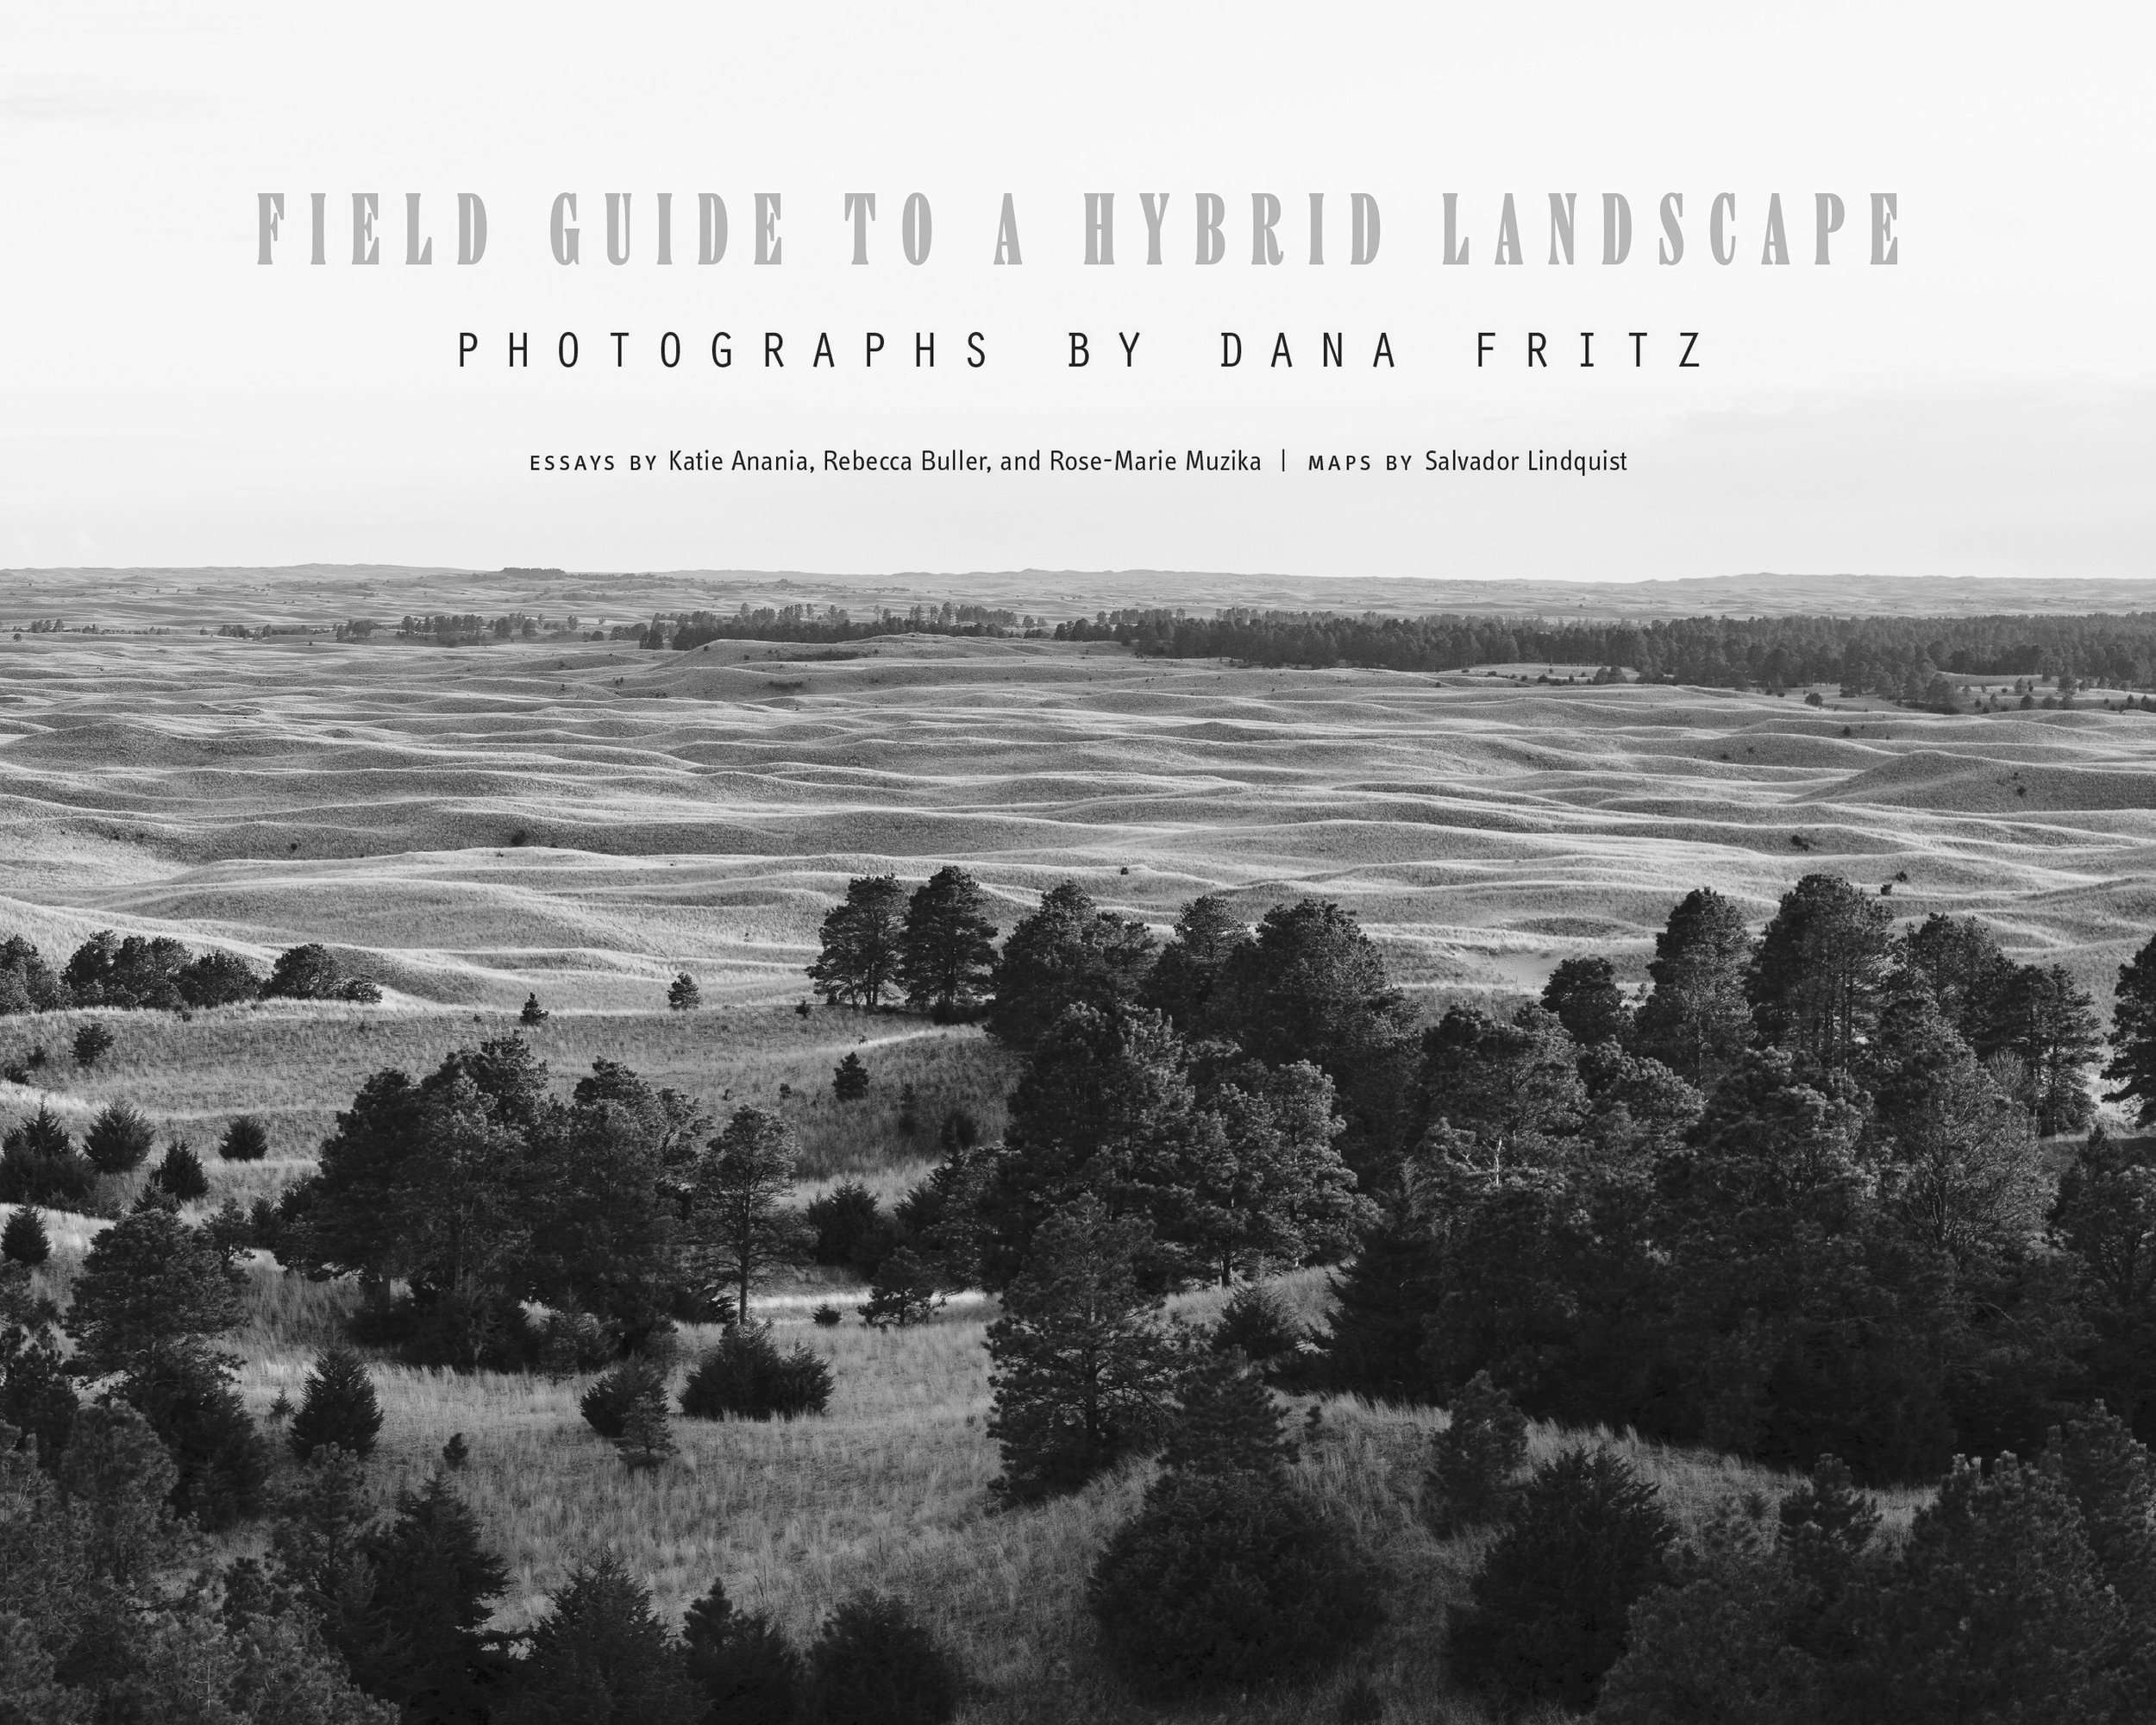 Field Guide to a Hybrid Landscape